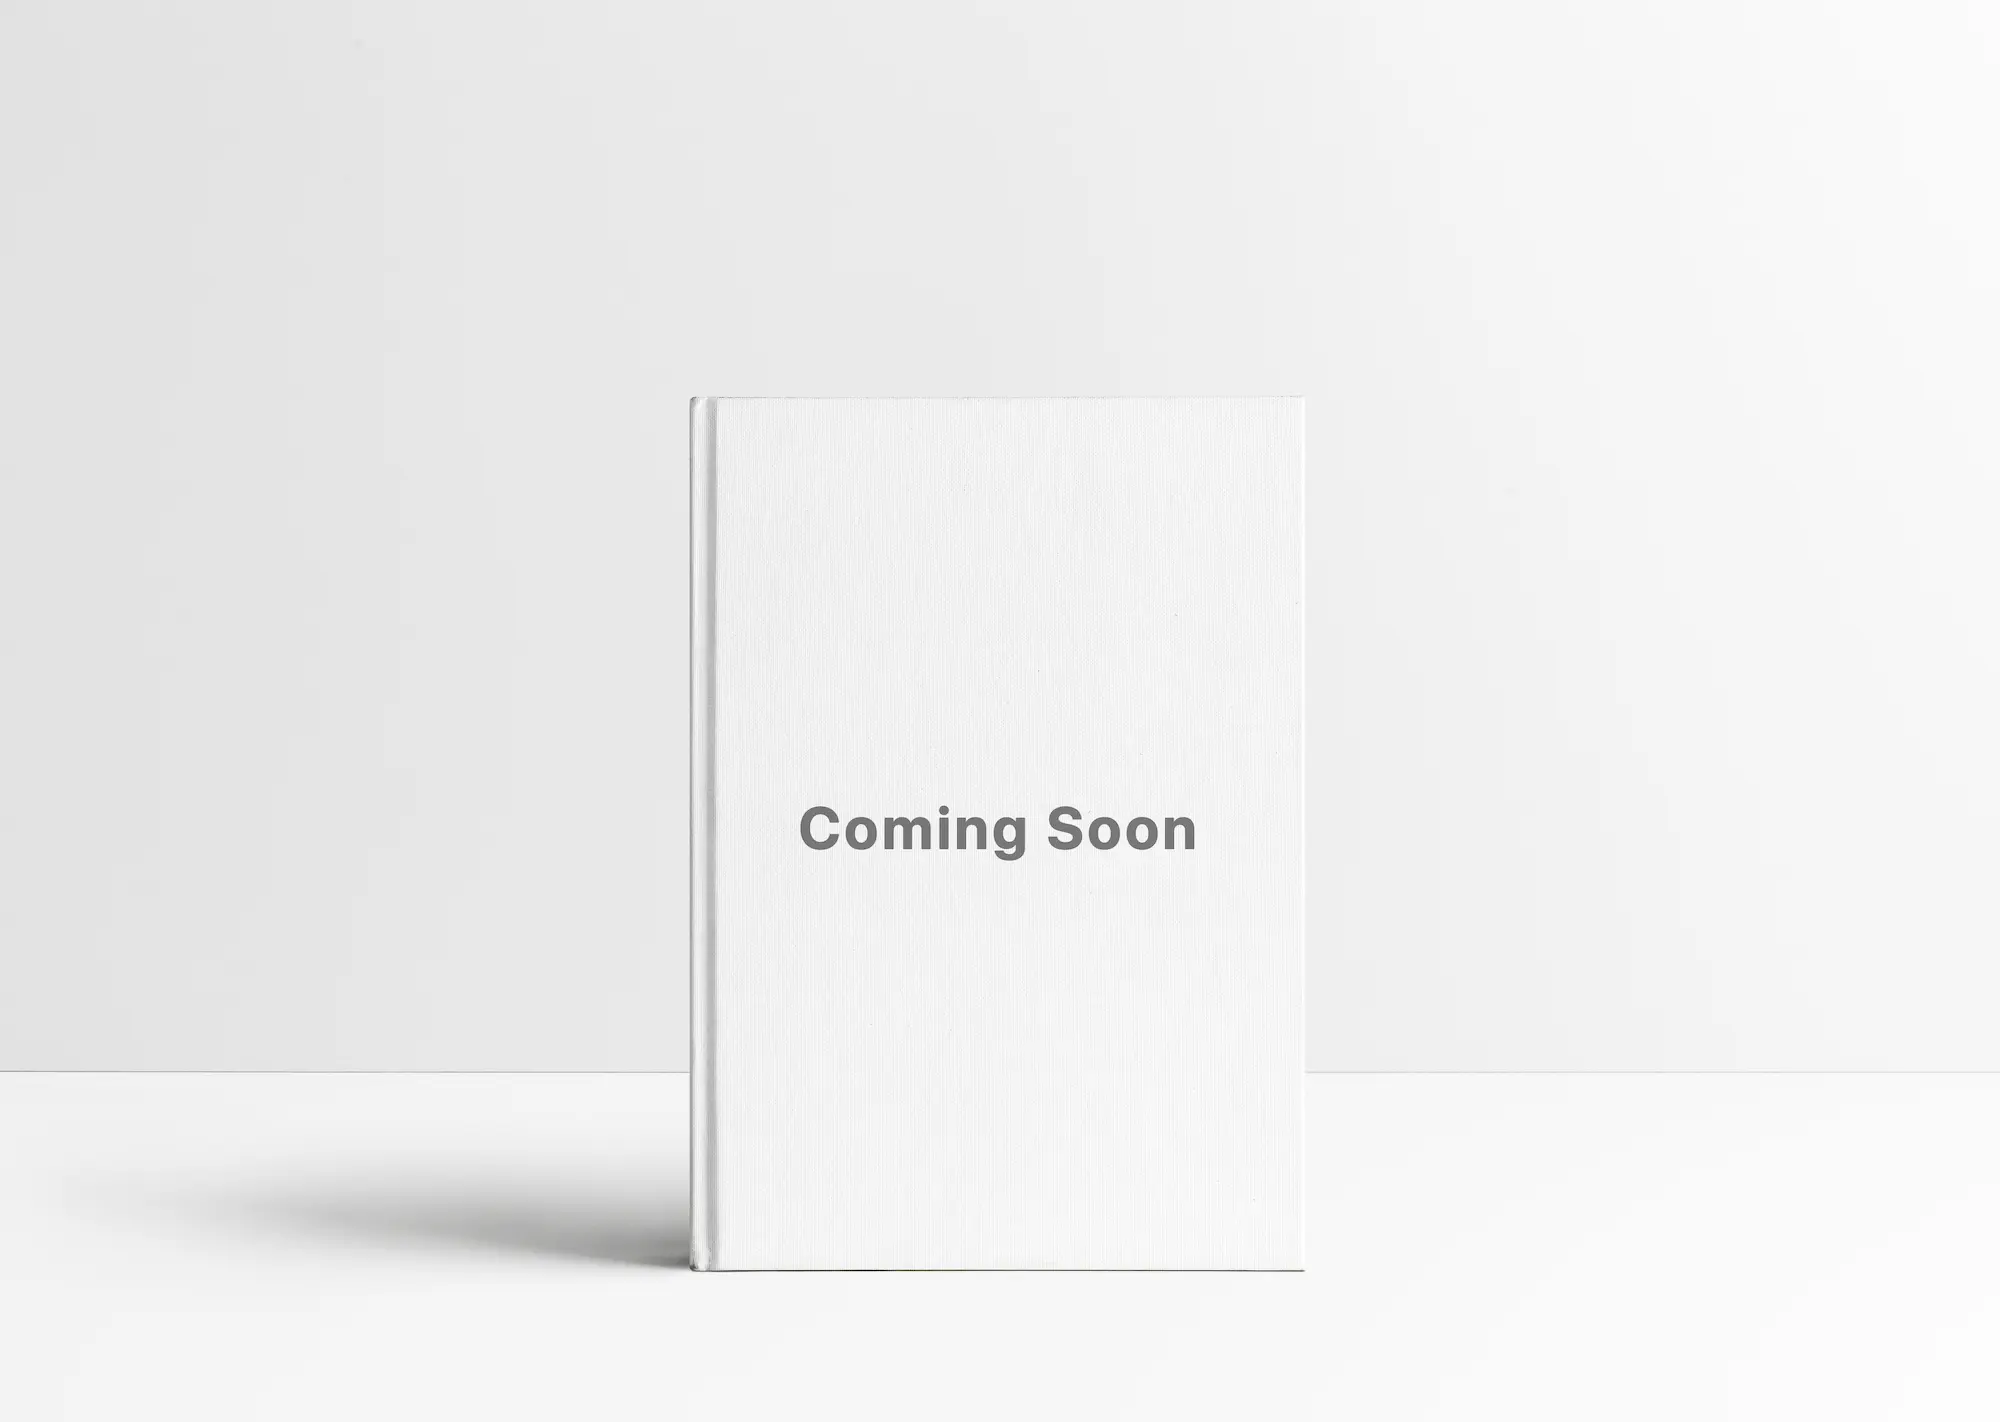 Whitepaper - Coming soon